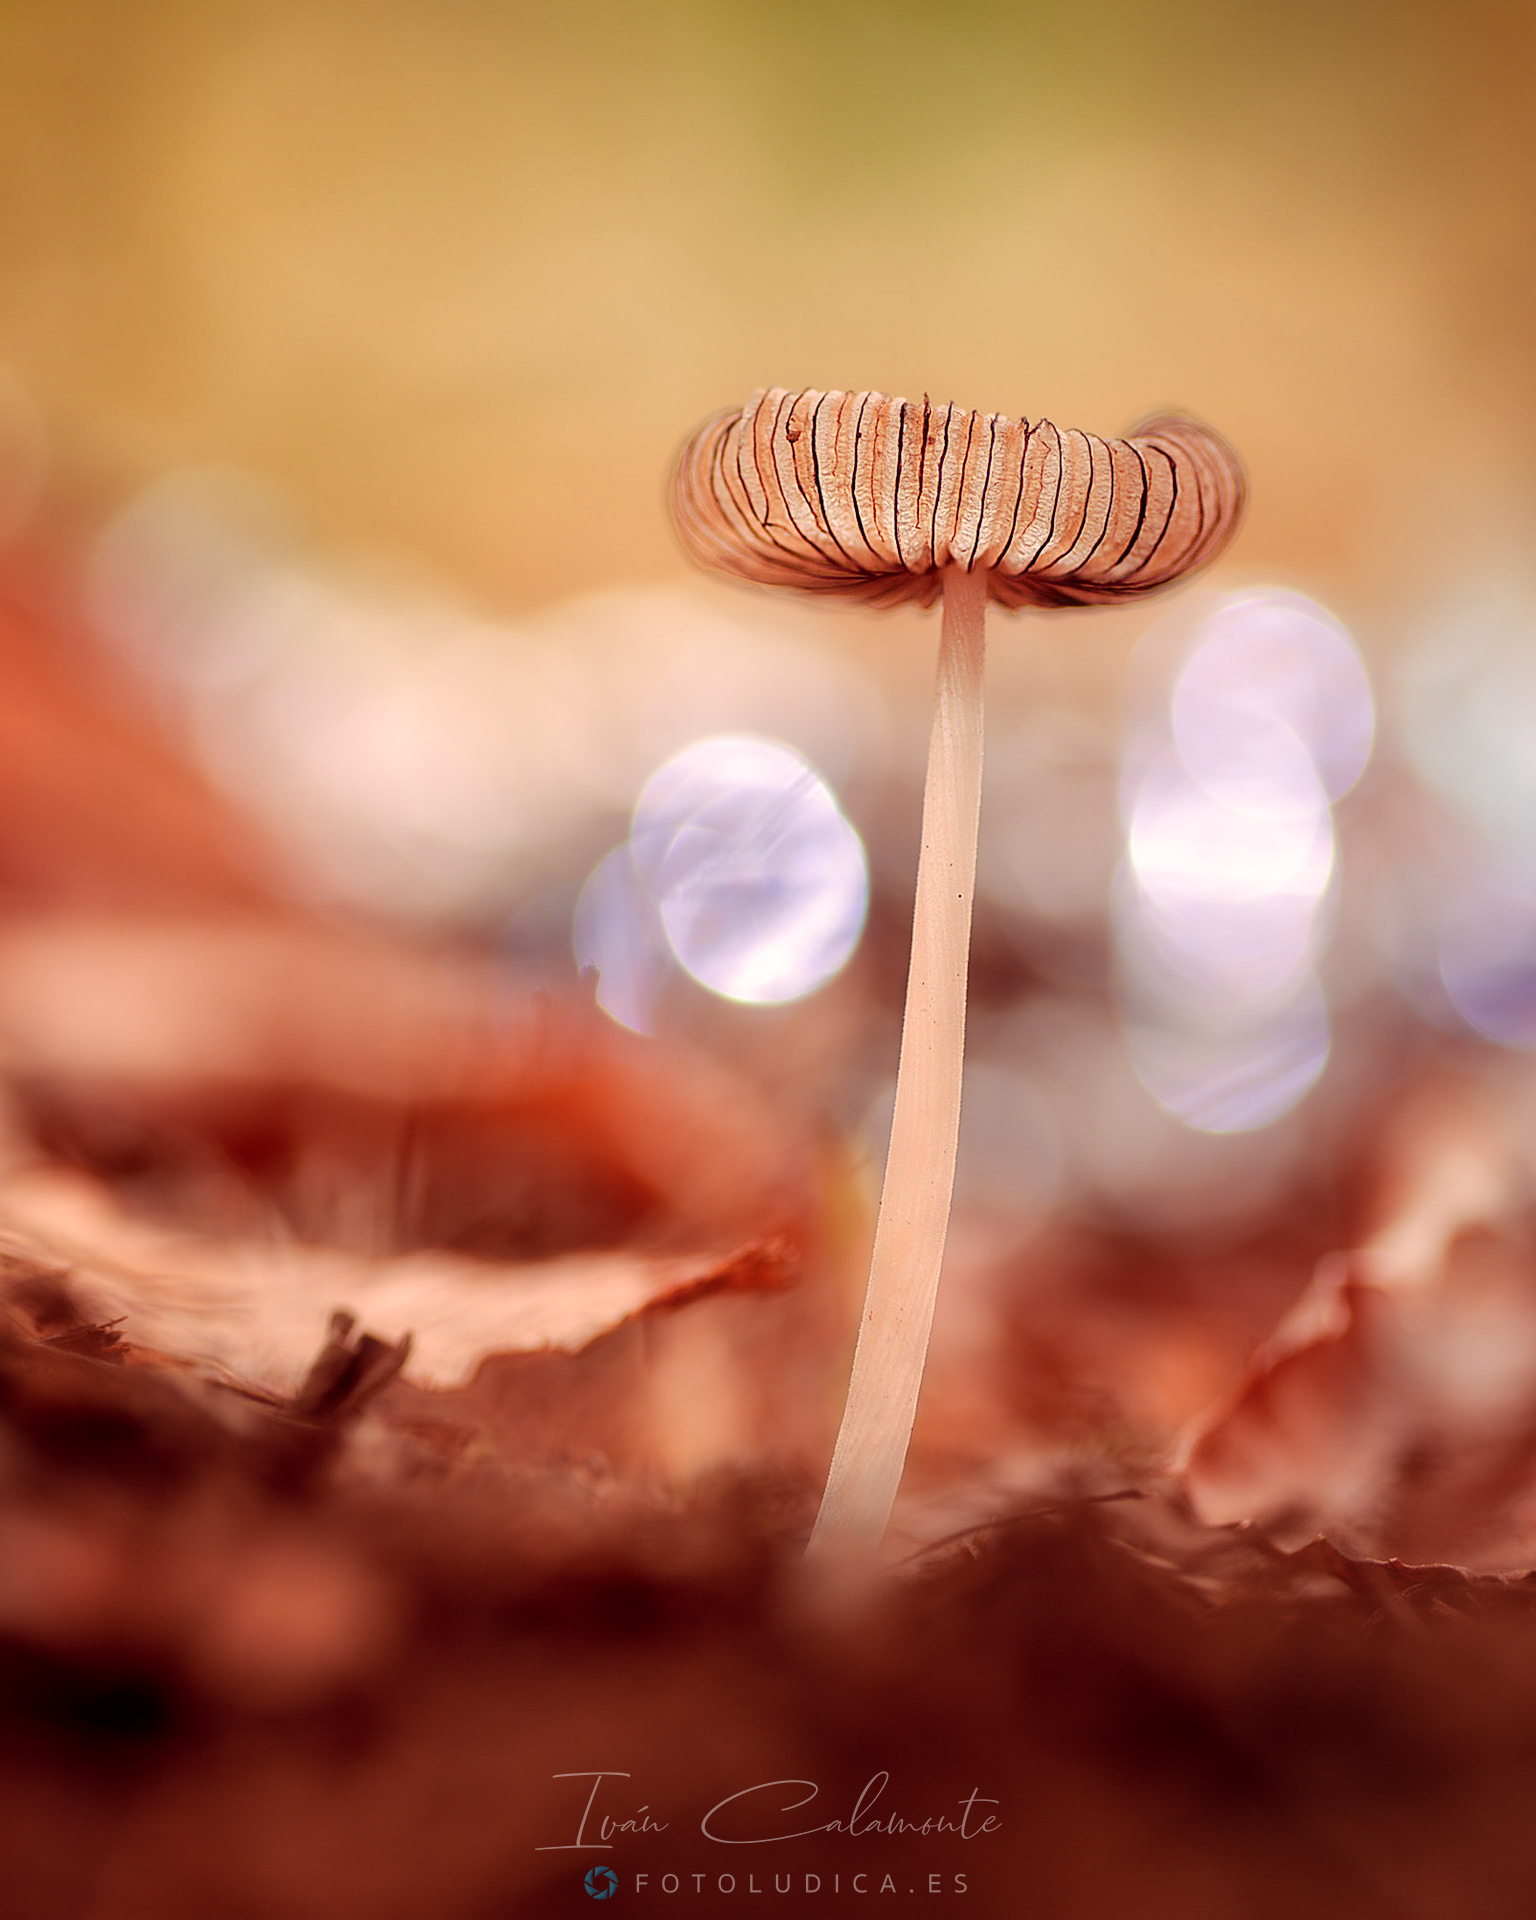 Just Another Mushroom